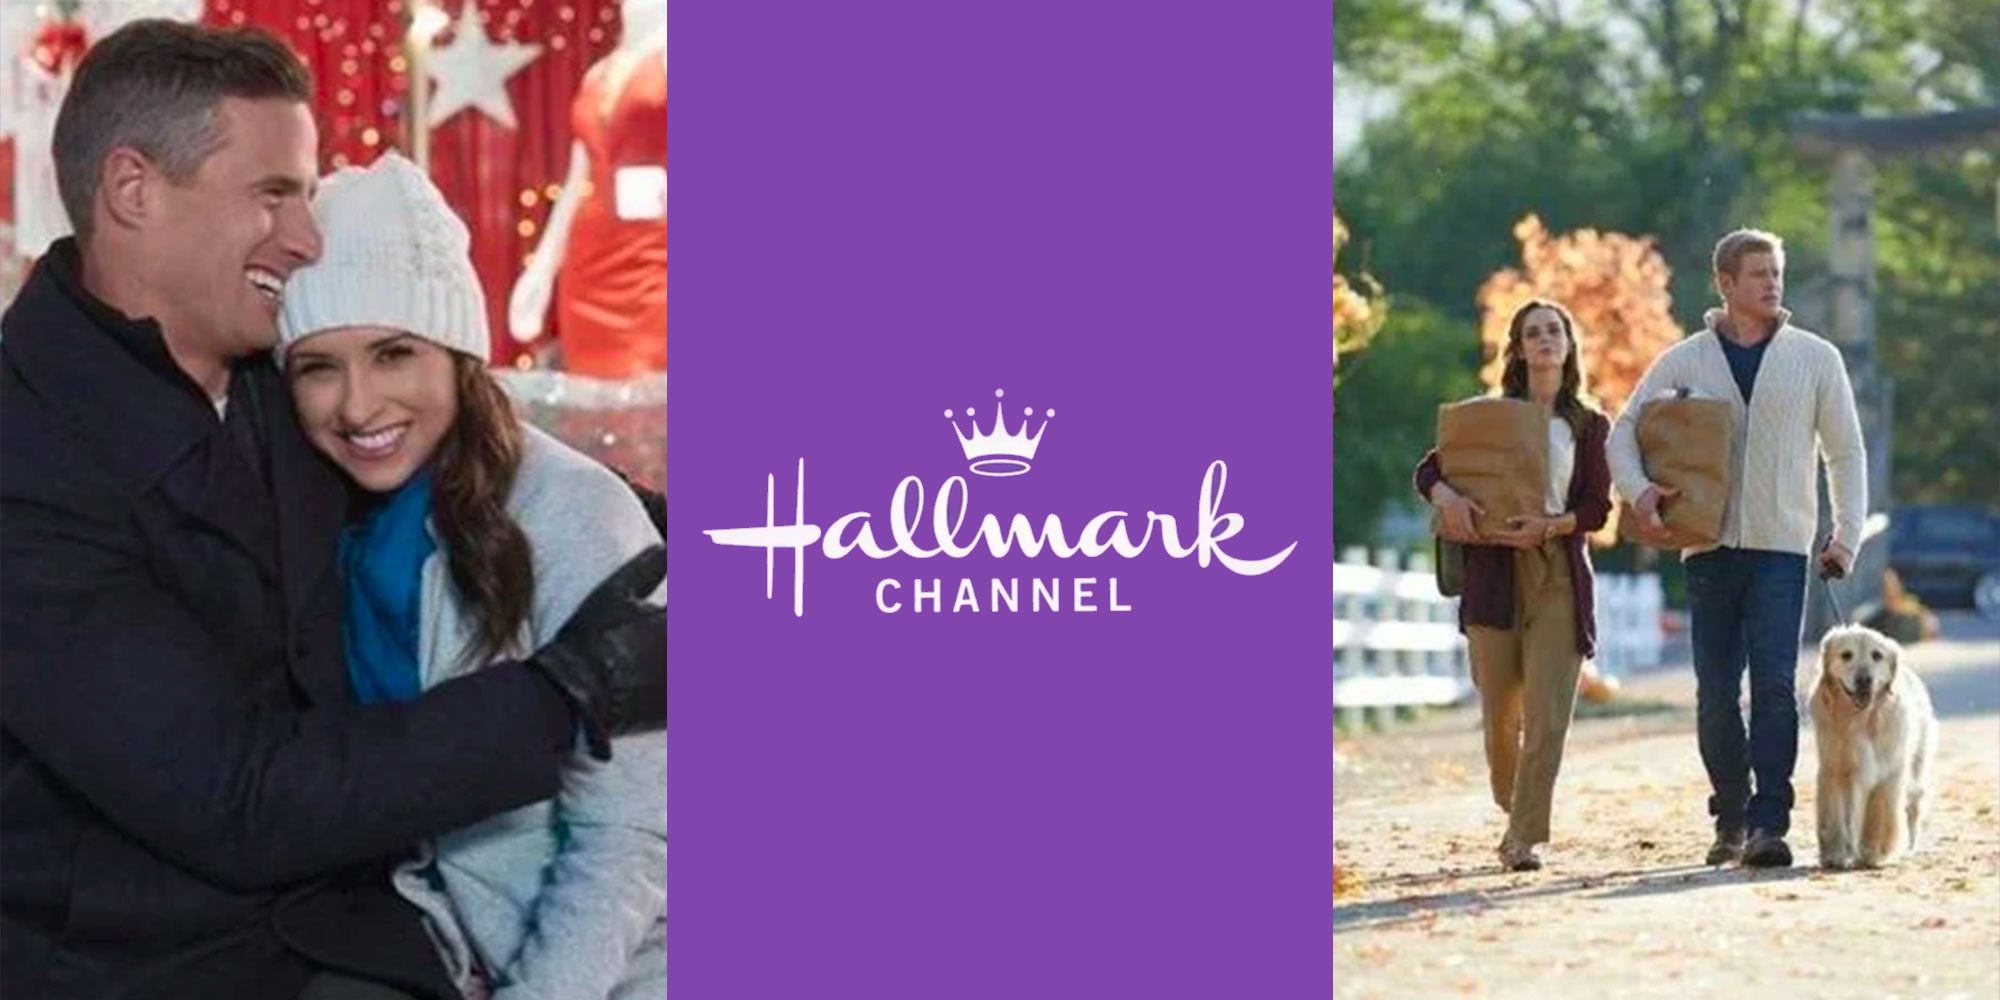 Split image of Hallmark movie characters around the Hallmark logo